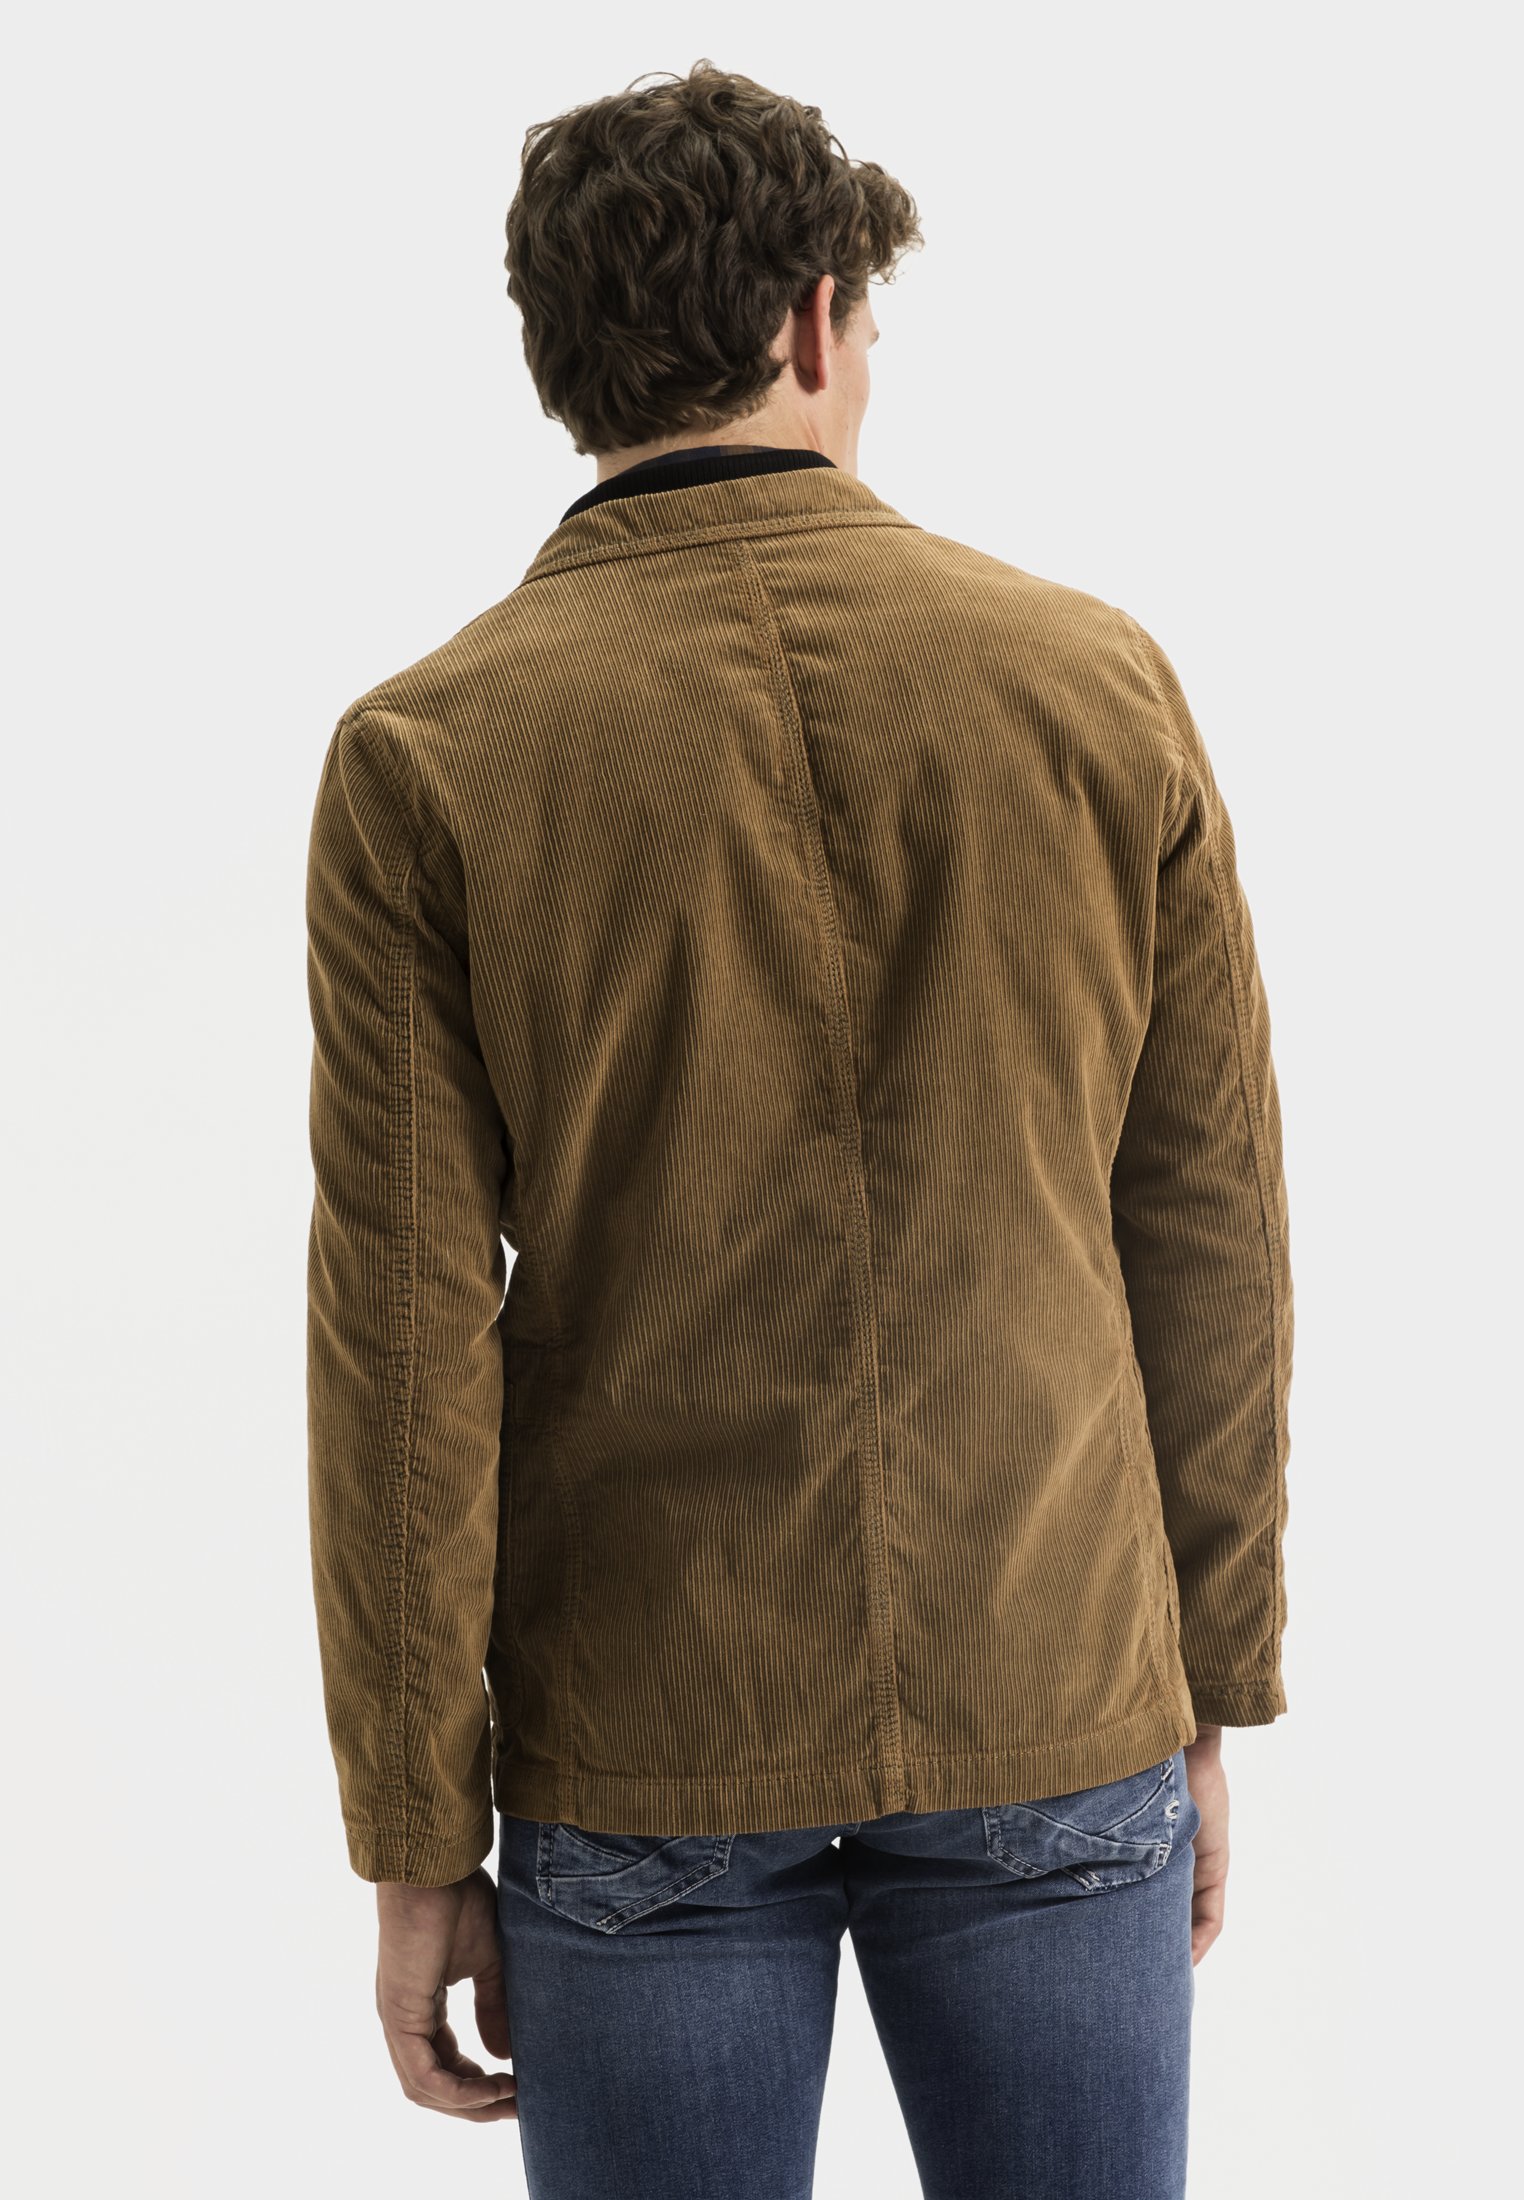 EG loiter jacket 8w corduroy 21AW Brown 買いオーダー - sofiateb.com